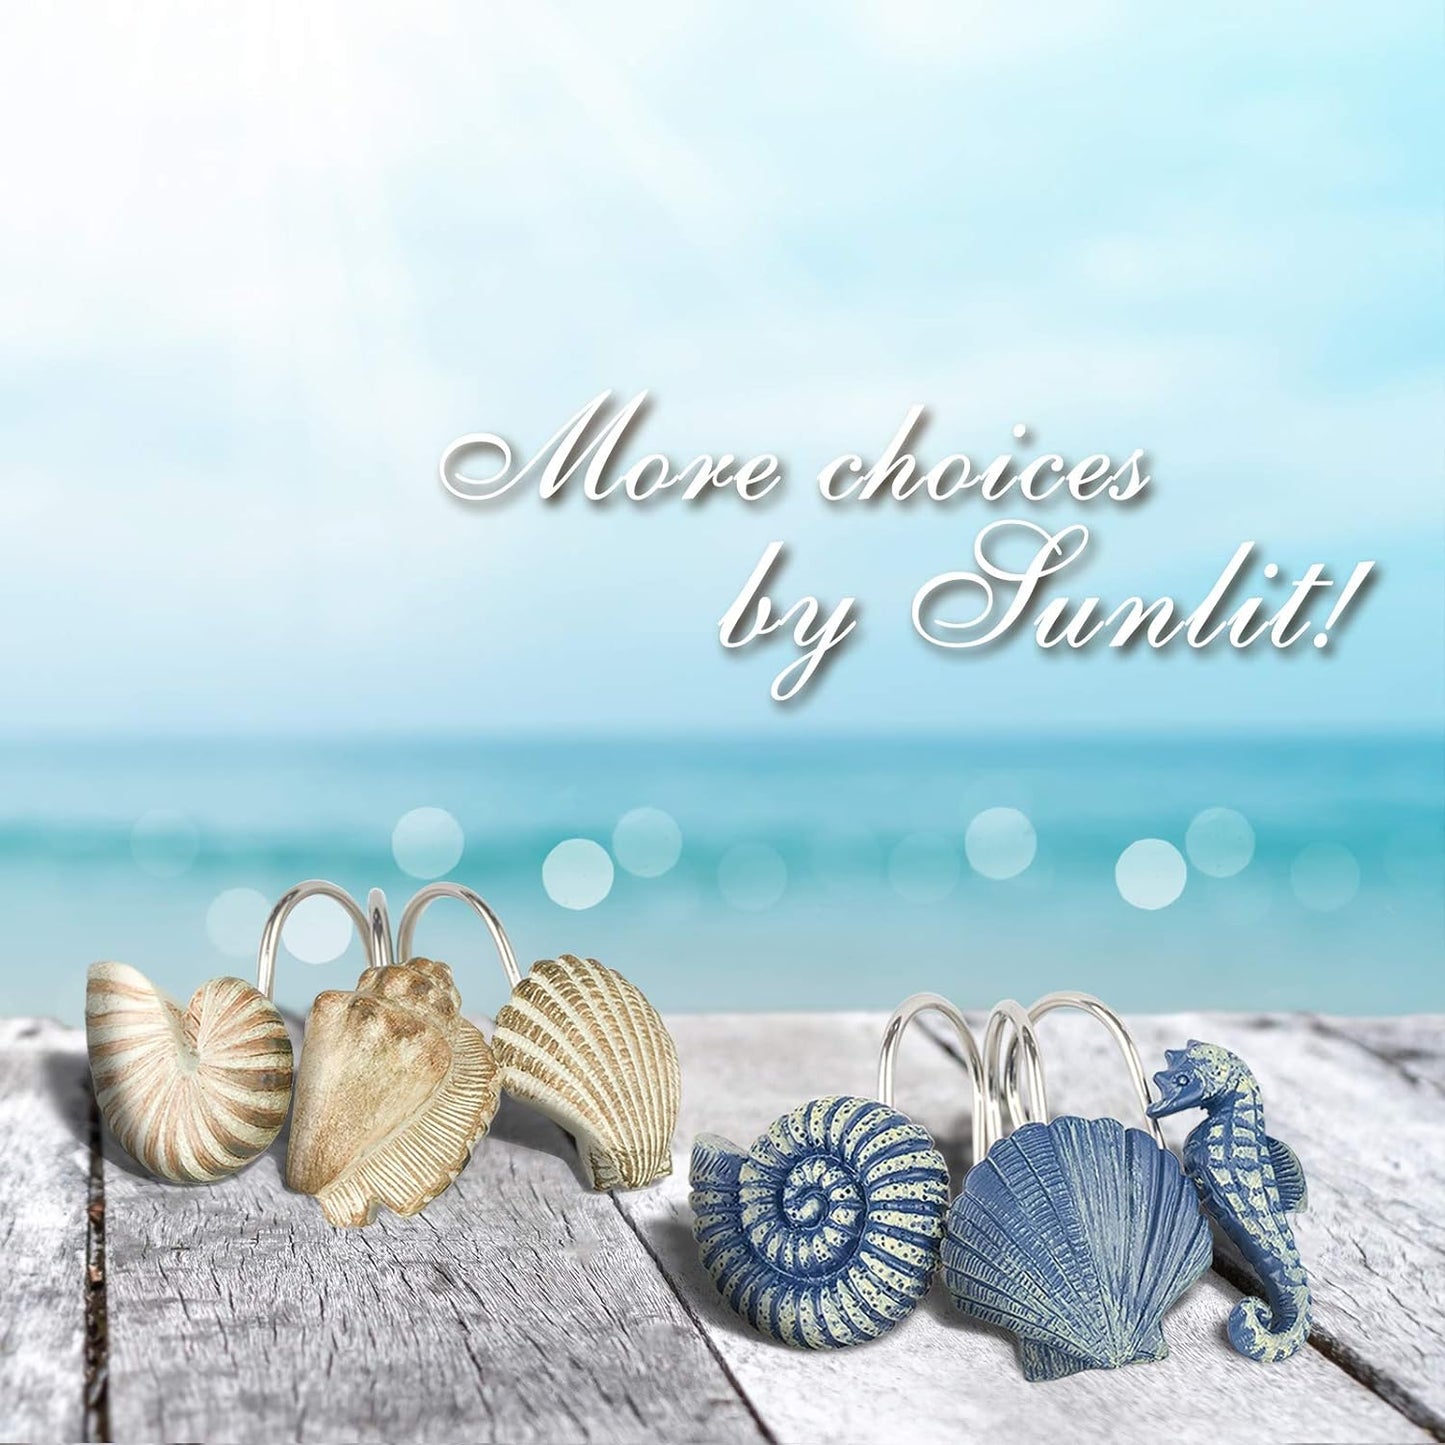 Sunlit Seashells Decorative Shower Curtain Hooks, Blue Ocean Creatures Coastal Shower Curtain Rings, Resin, Nautical Bathroom Decoration Beach Shower Curtain Hooks-12 Pack